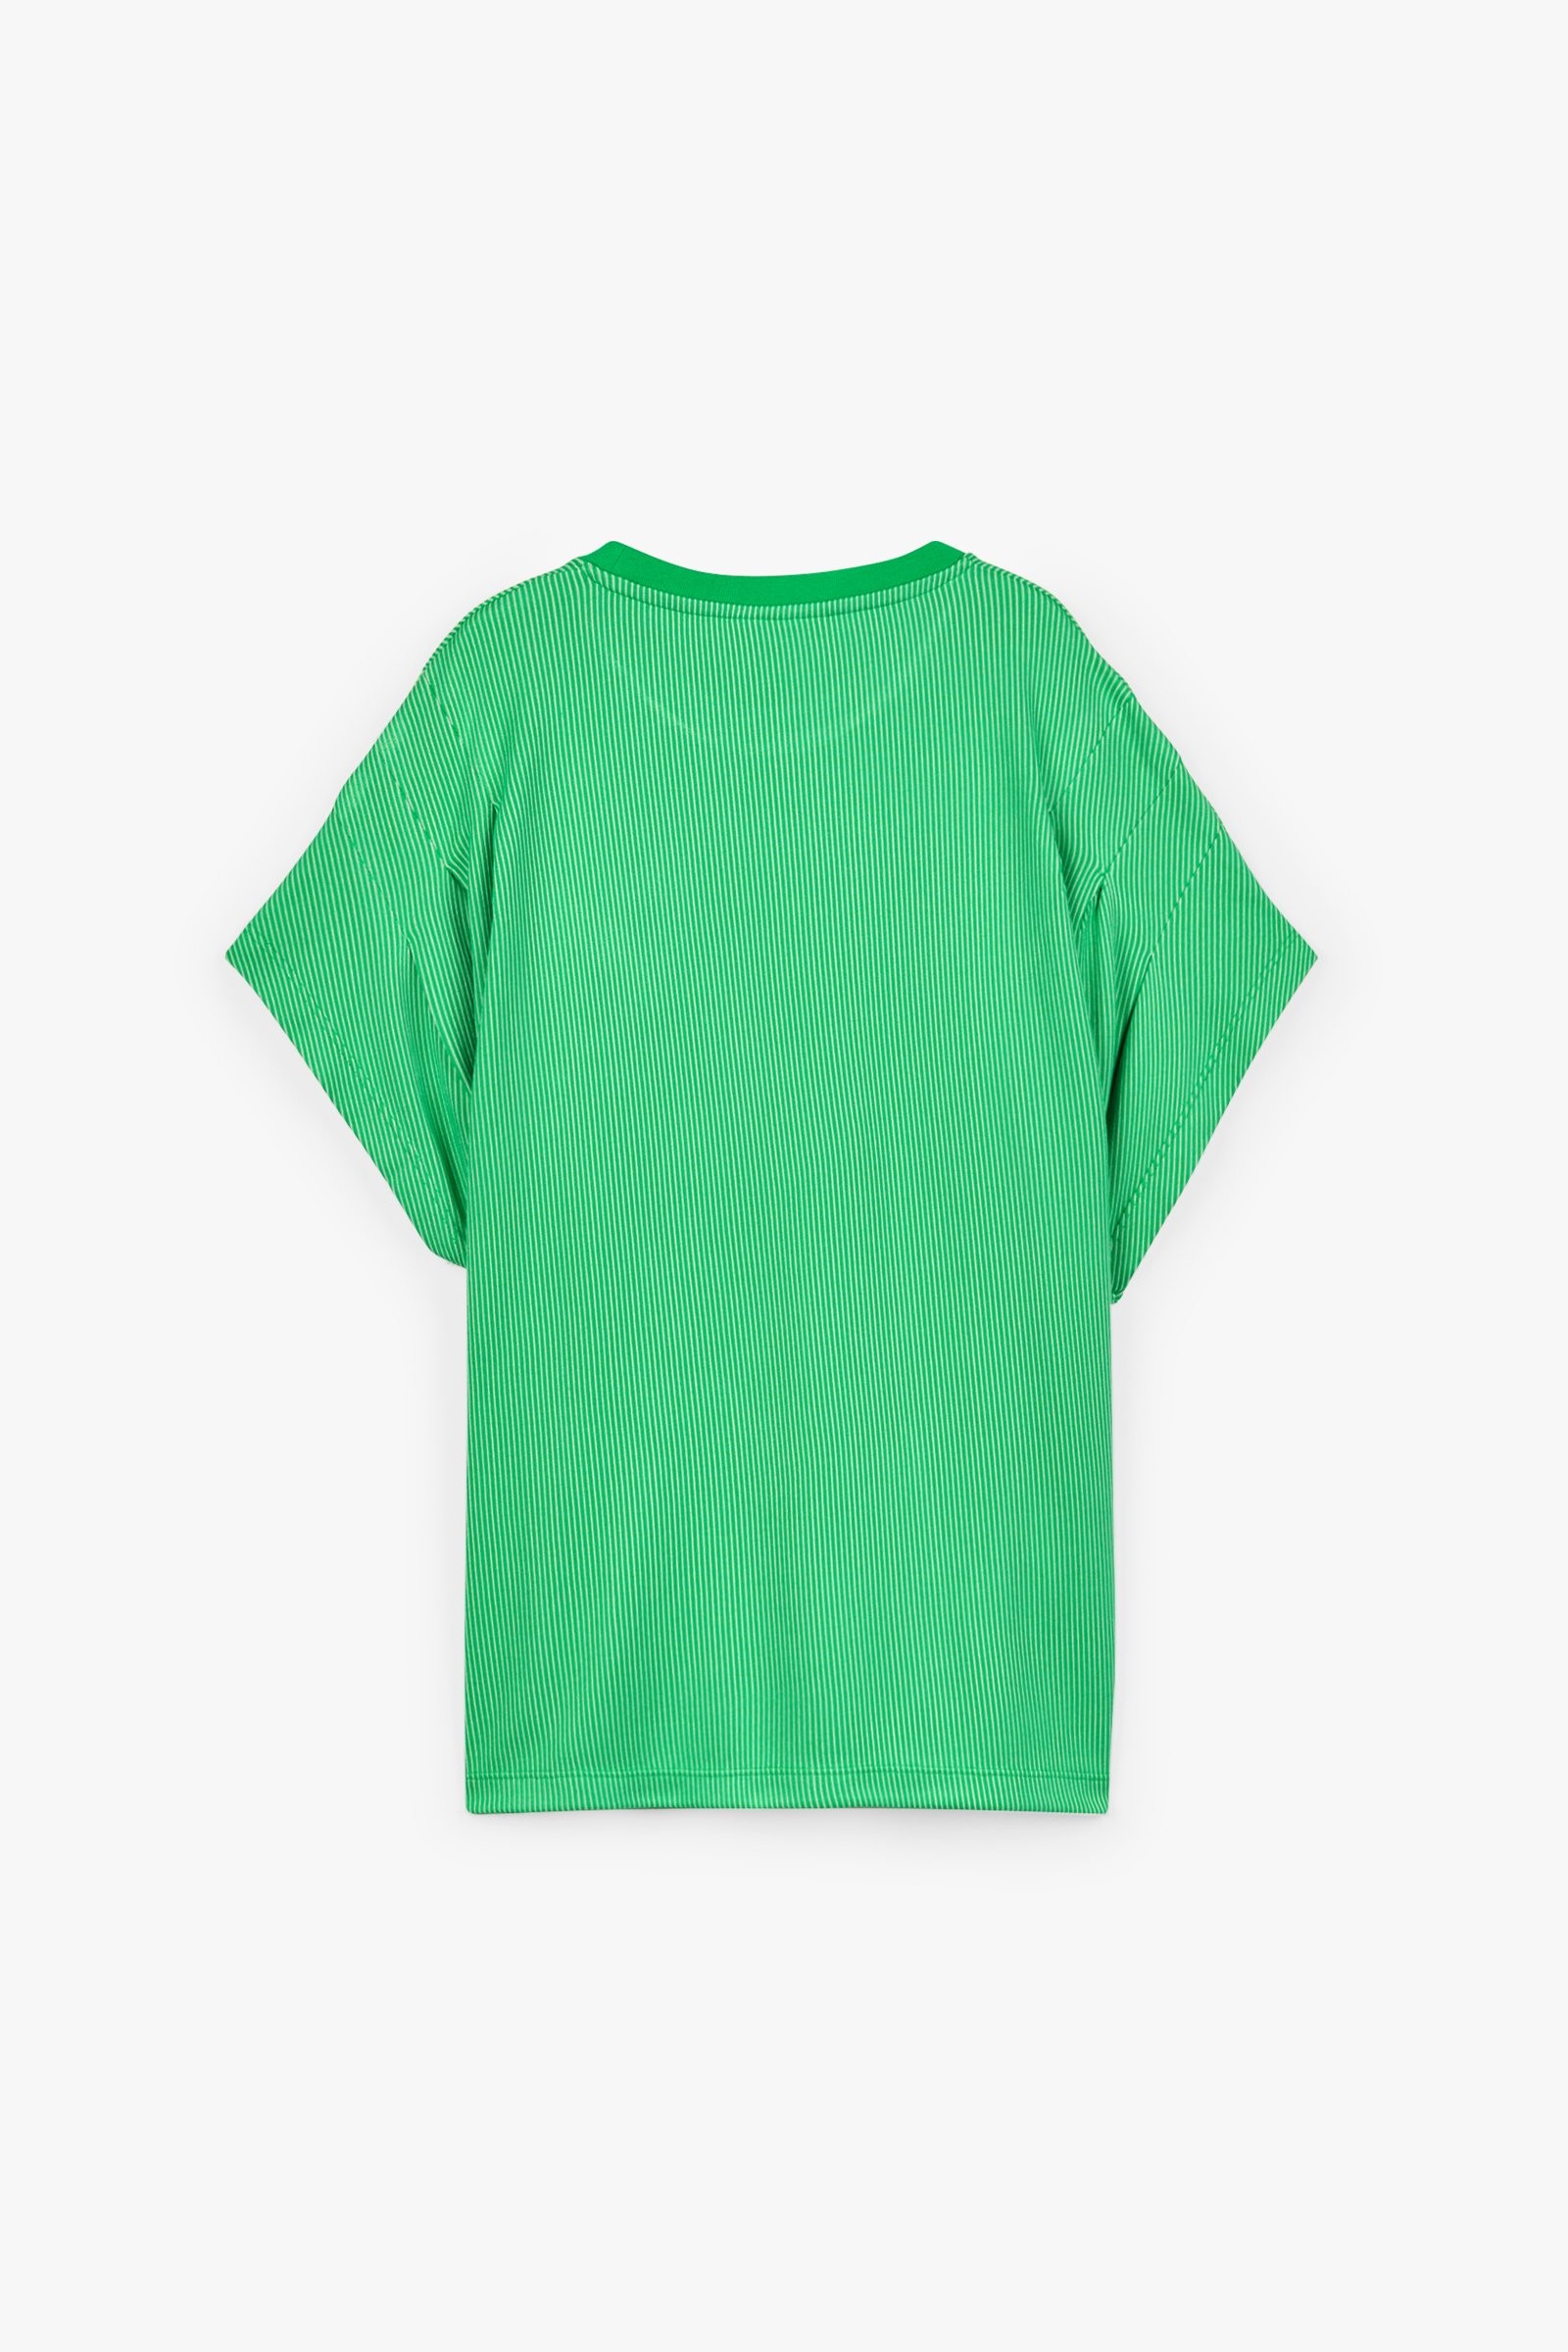 CKS Dames - JAZZY - T-Shirt Kurzarm - Grün